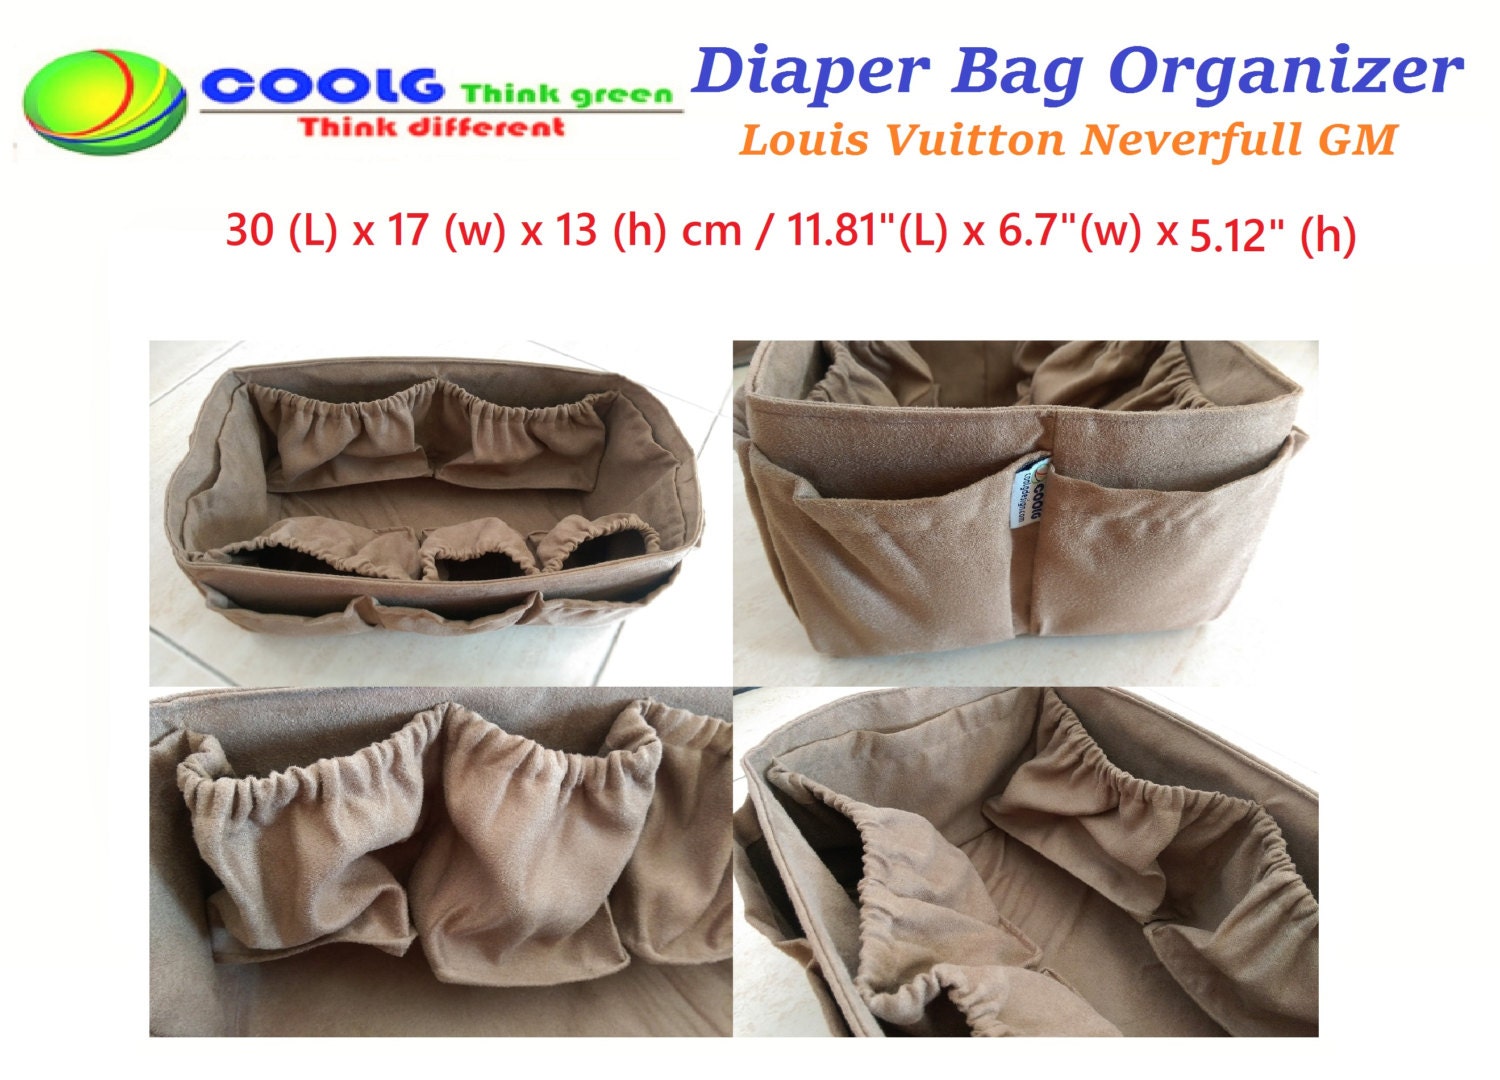 Stylish Diaper Bag Organizer Insert for LV Neverfull GM extra